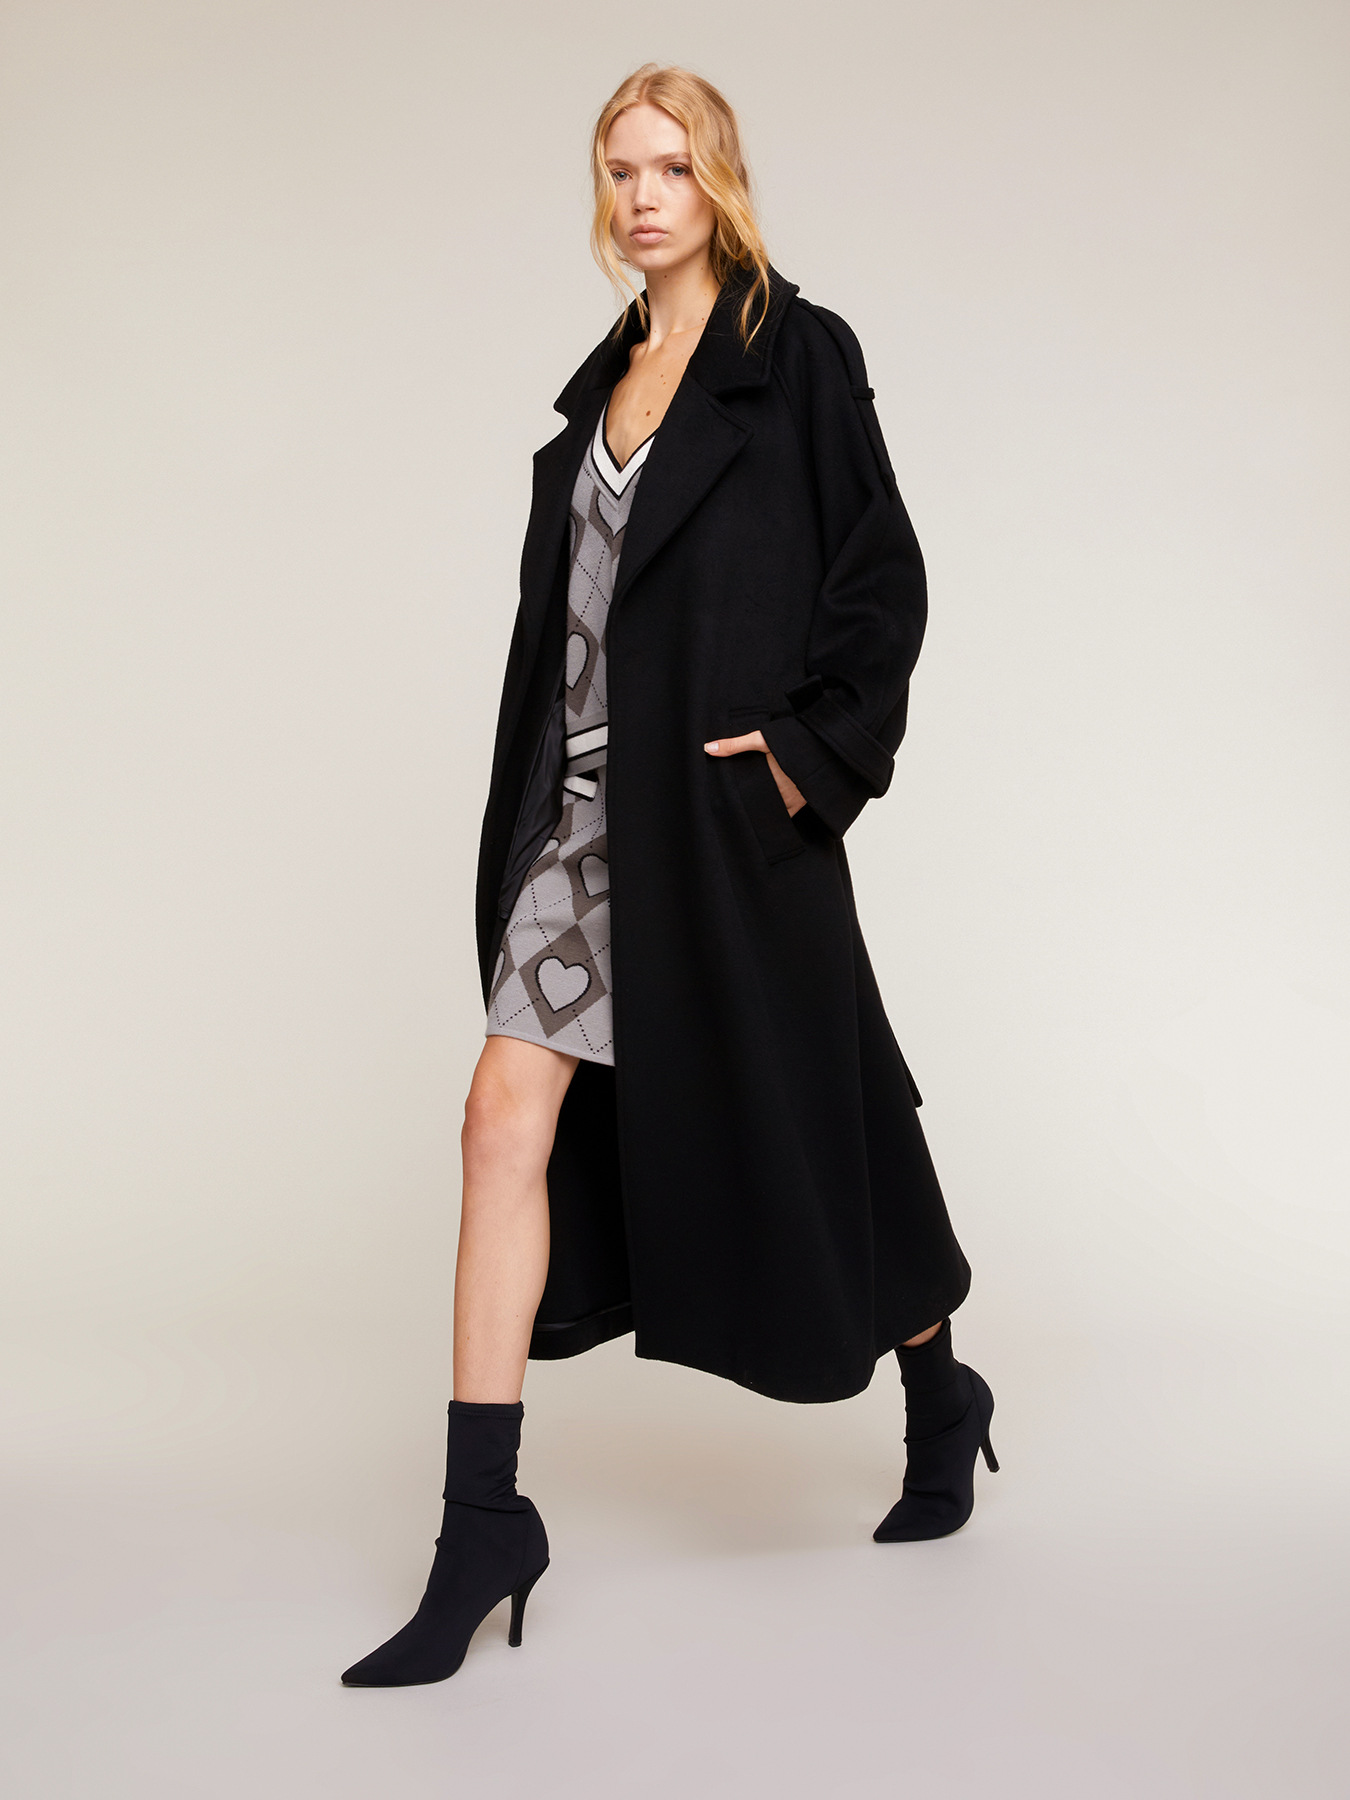 LOUIS VUITTON Size 36 Black Solid Polyester Wool Wide Leg Dress